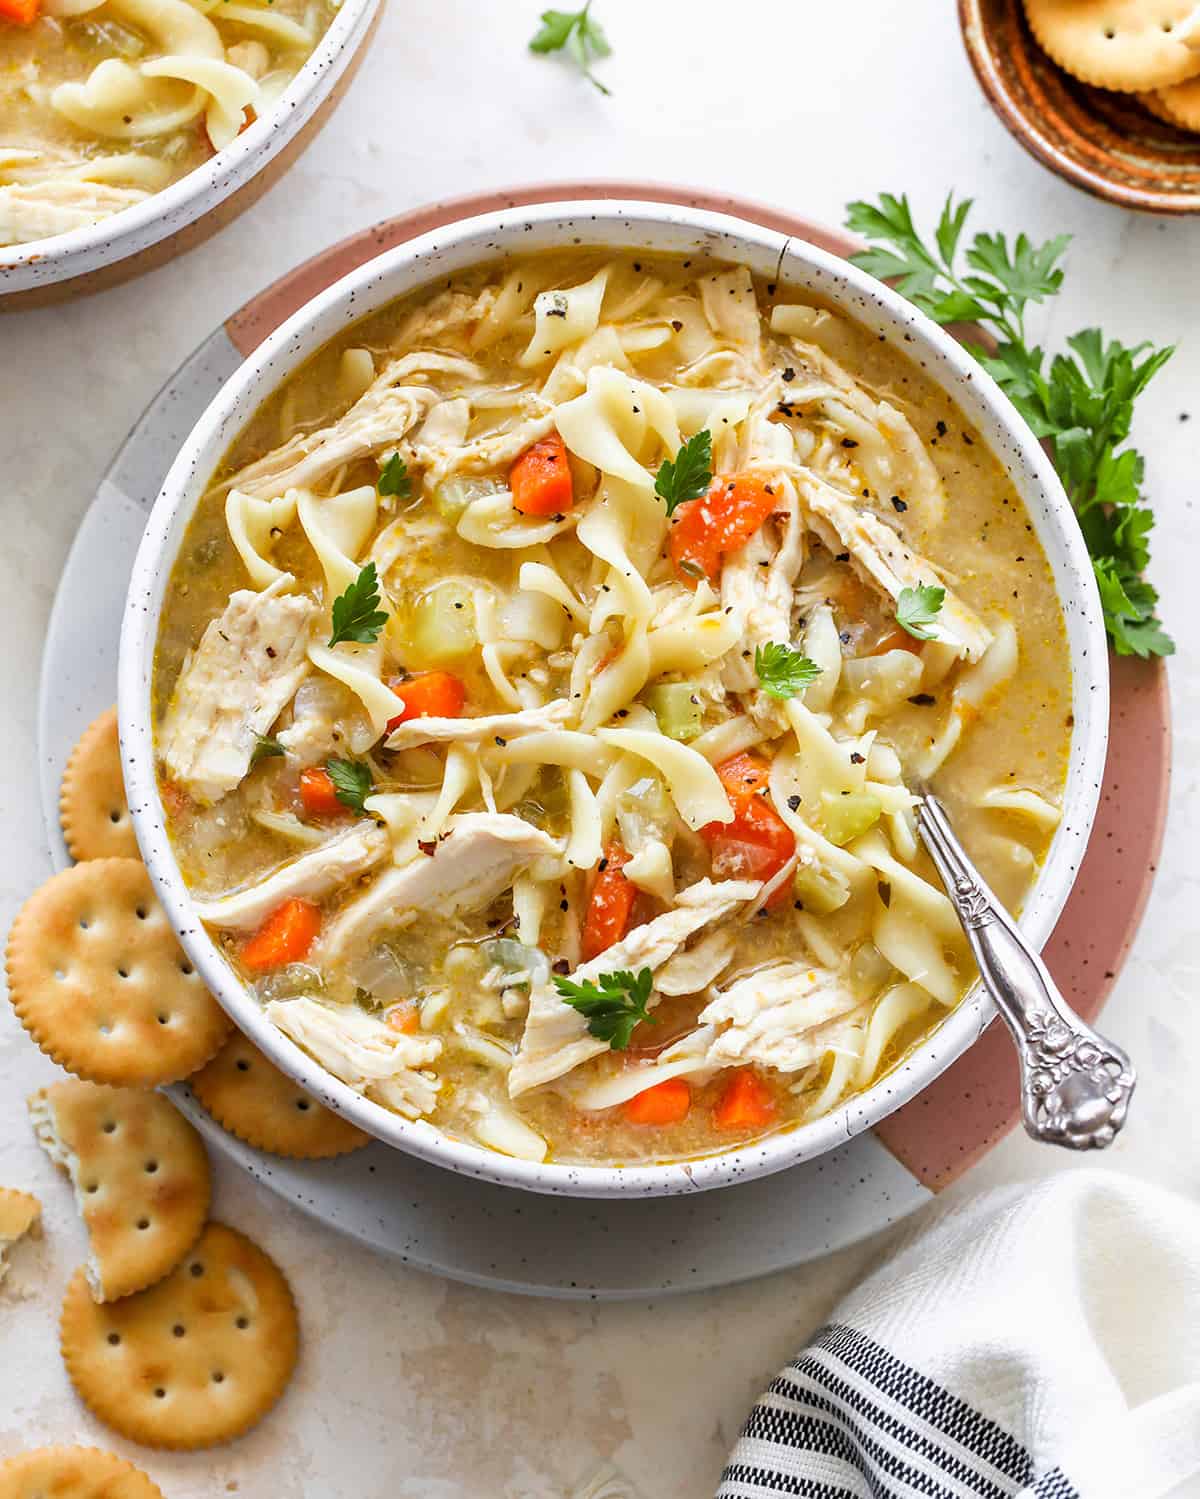 https://joyfoodsunshine.com/wp-content/uploads/2021/01/best-homemade-chicken-noodle-soup-recipe-3.jpg